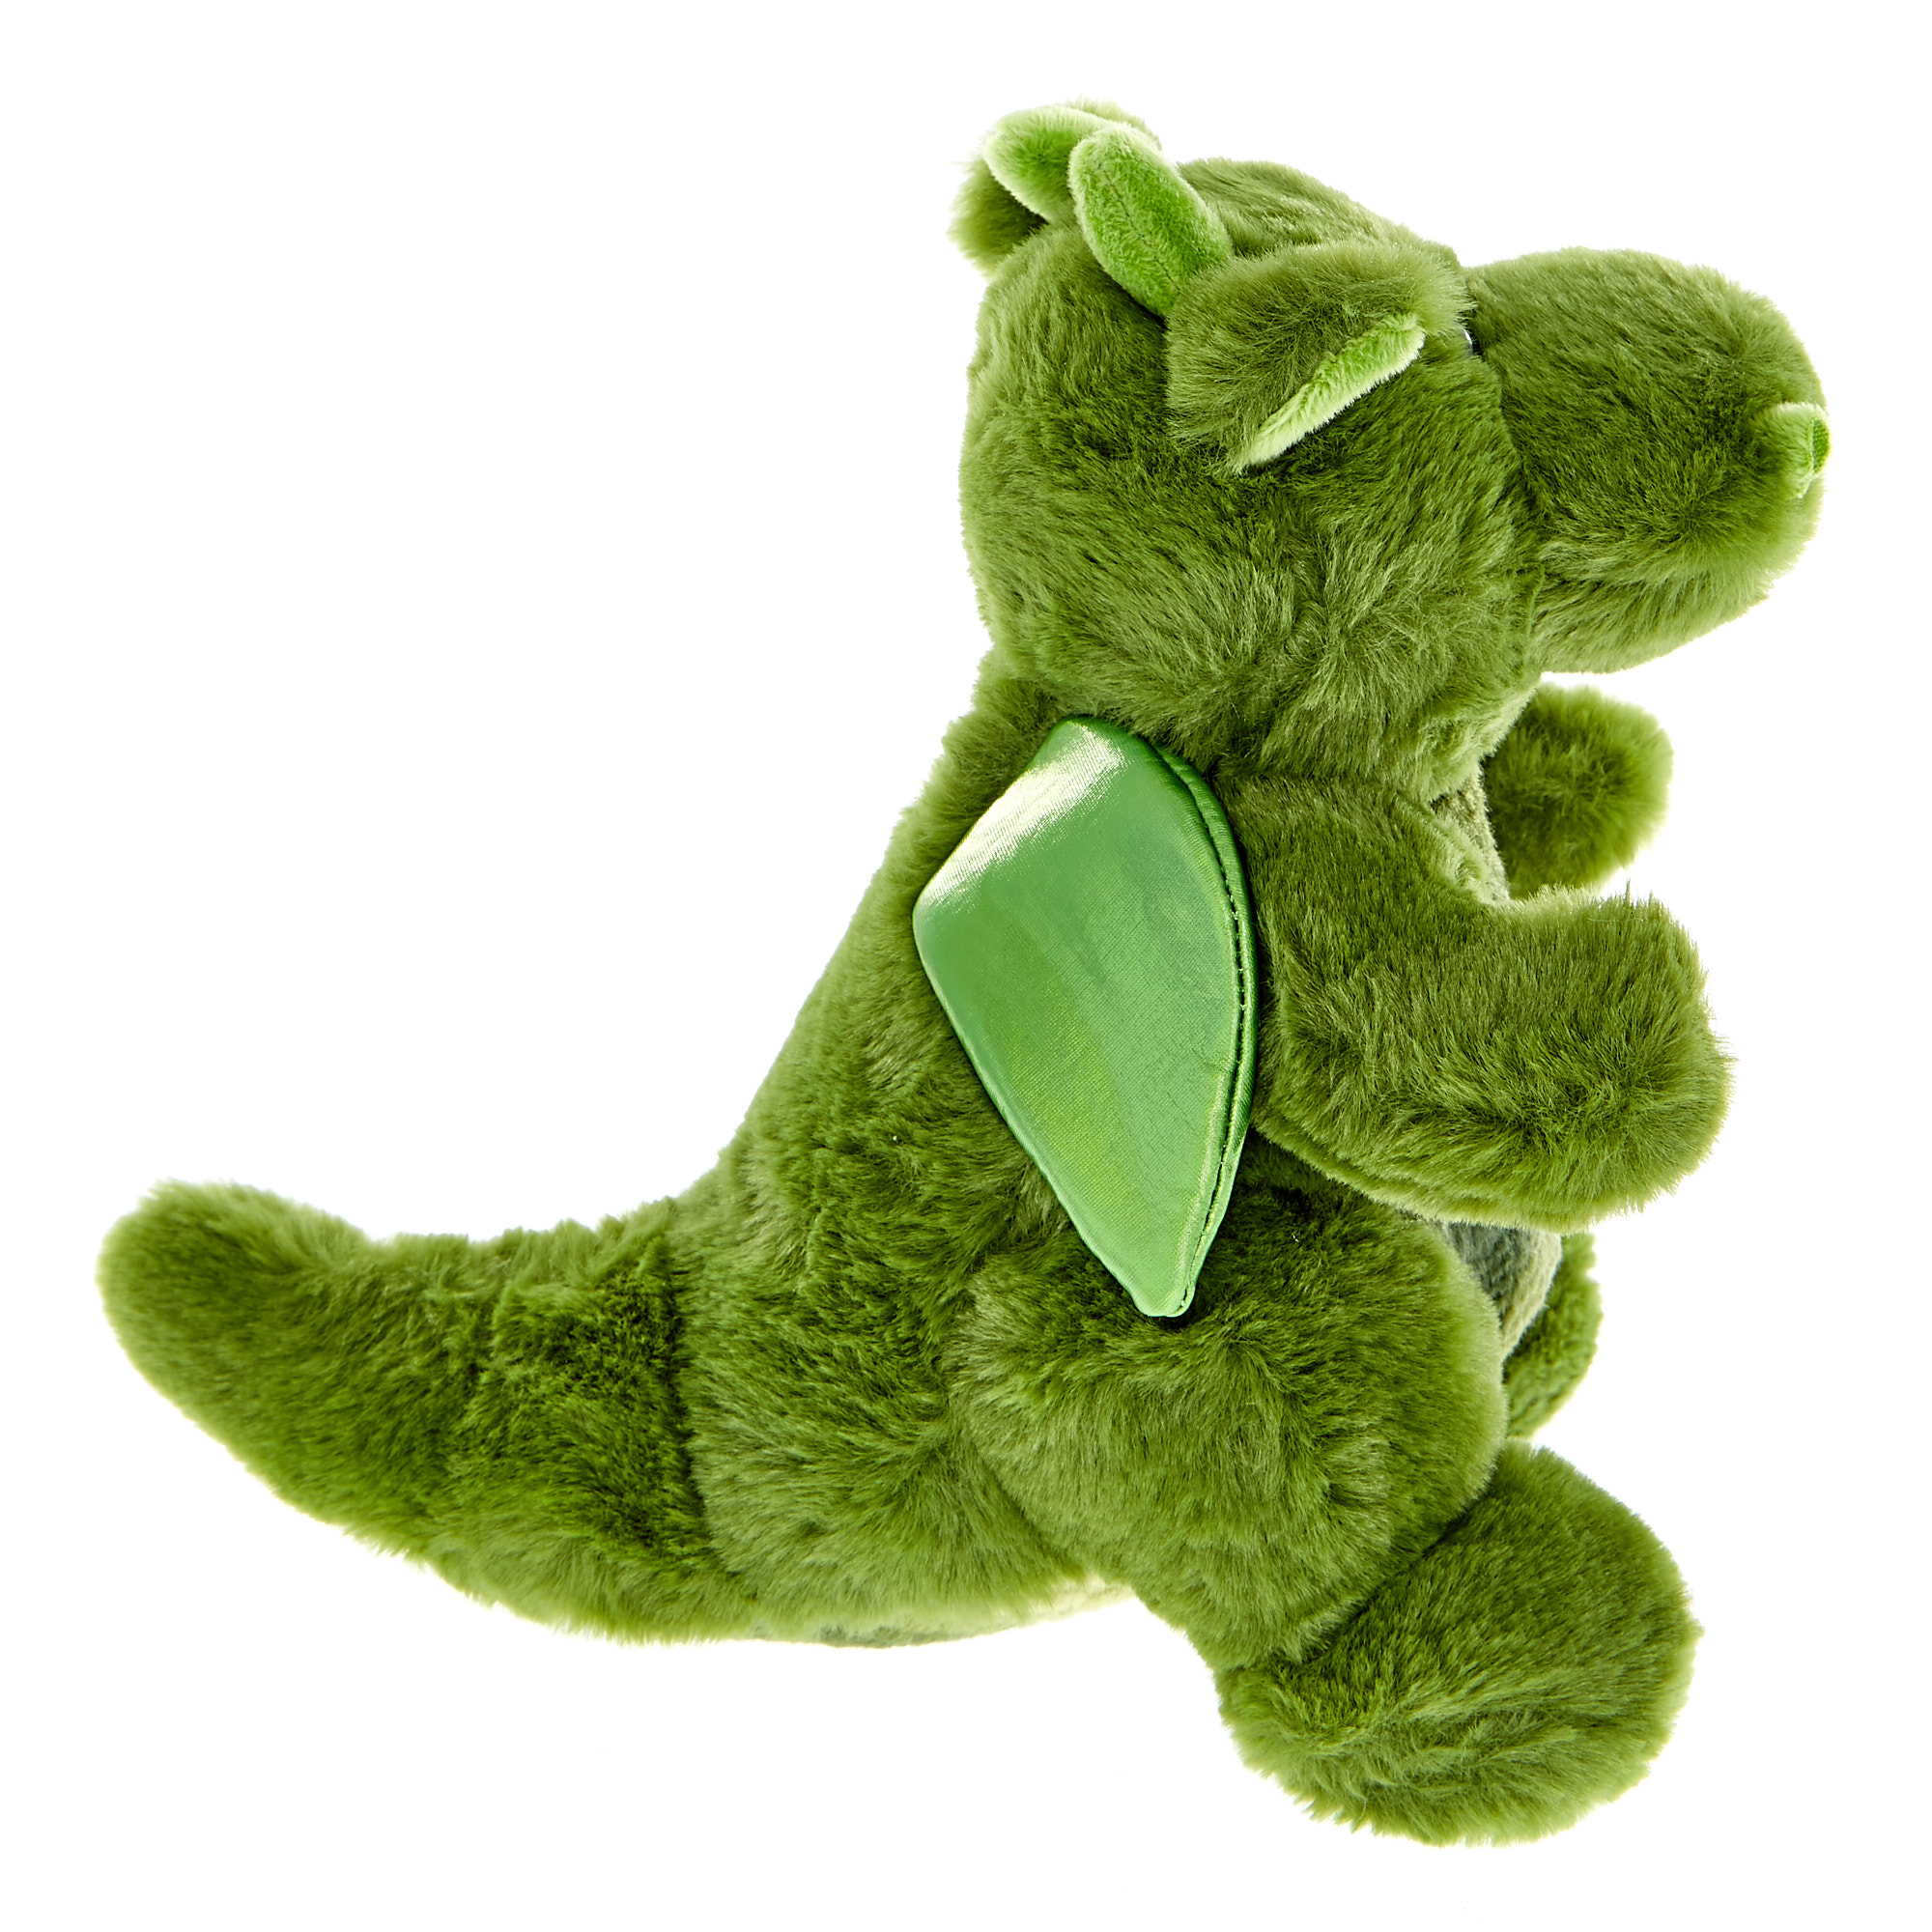 Green Dragon Soft Toy